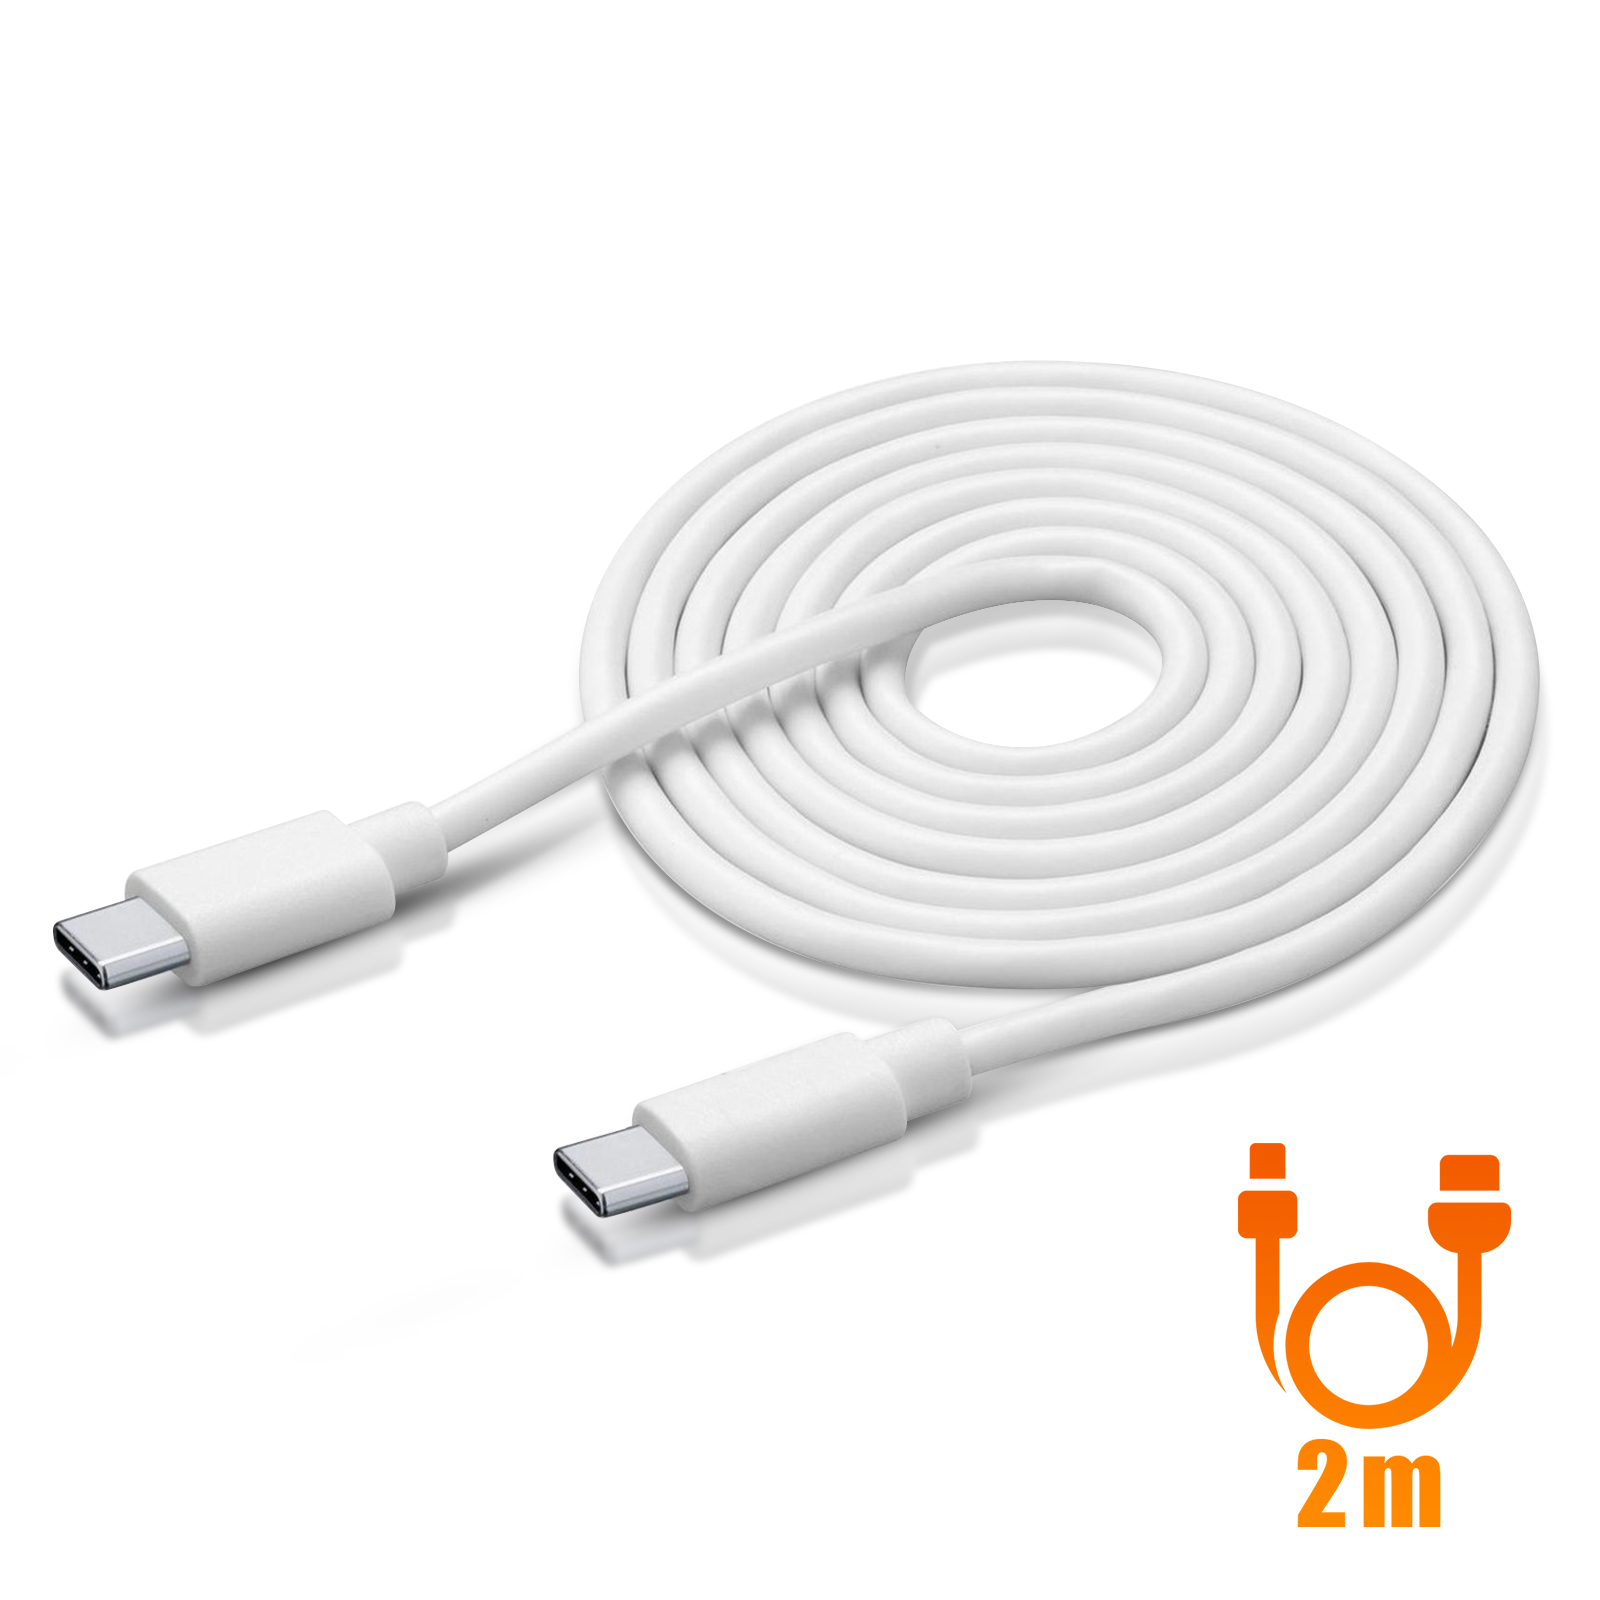 Chargeur apple USB-C 61 W Blanc Macbook Air compatible